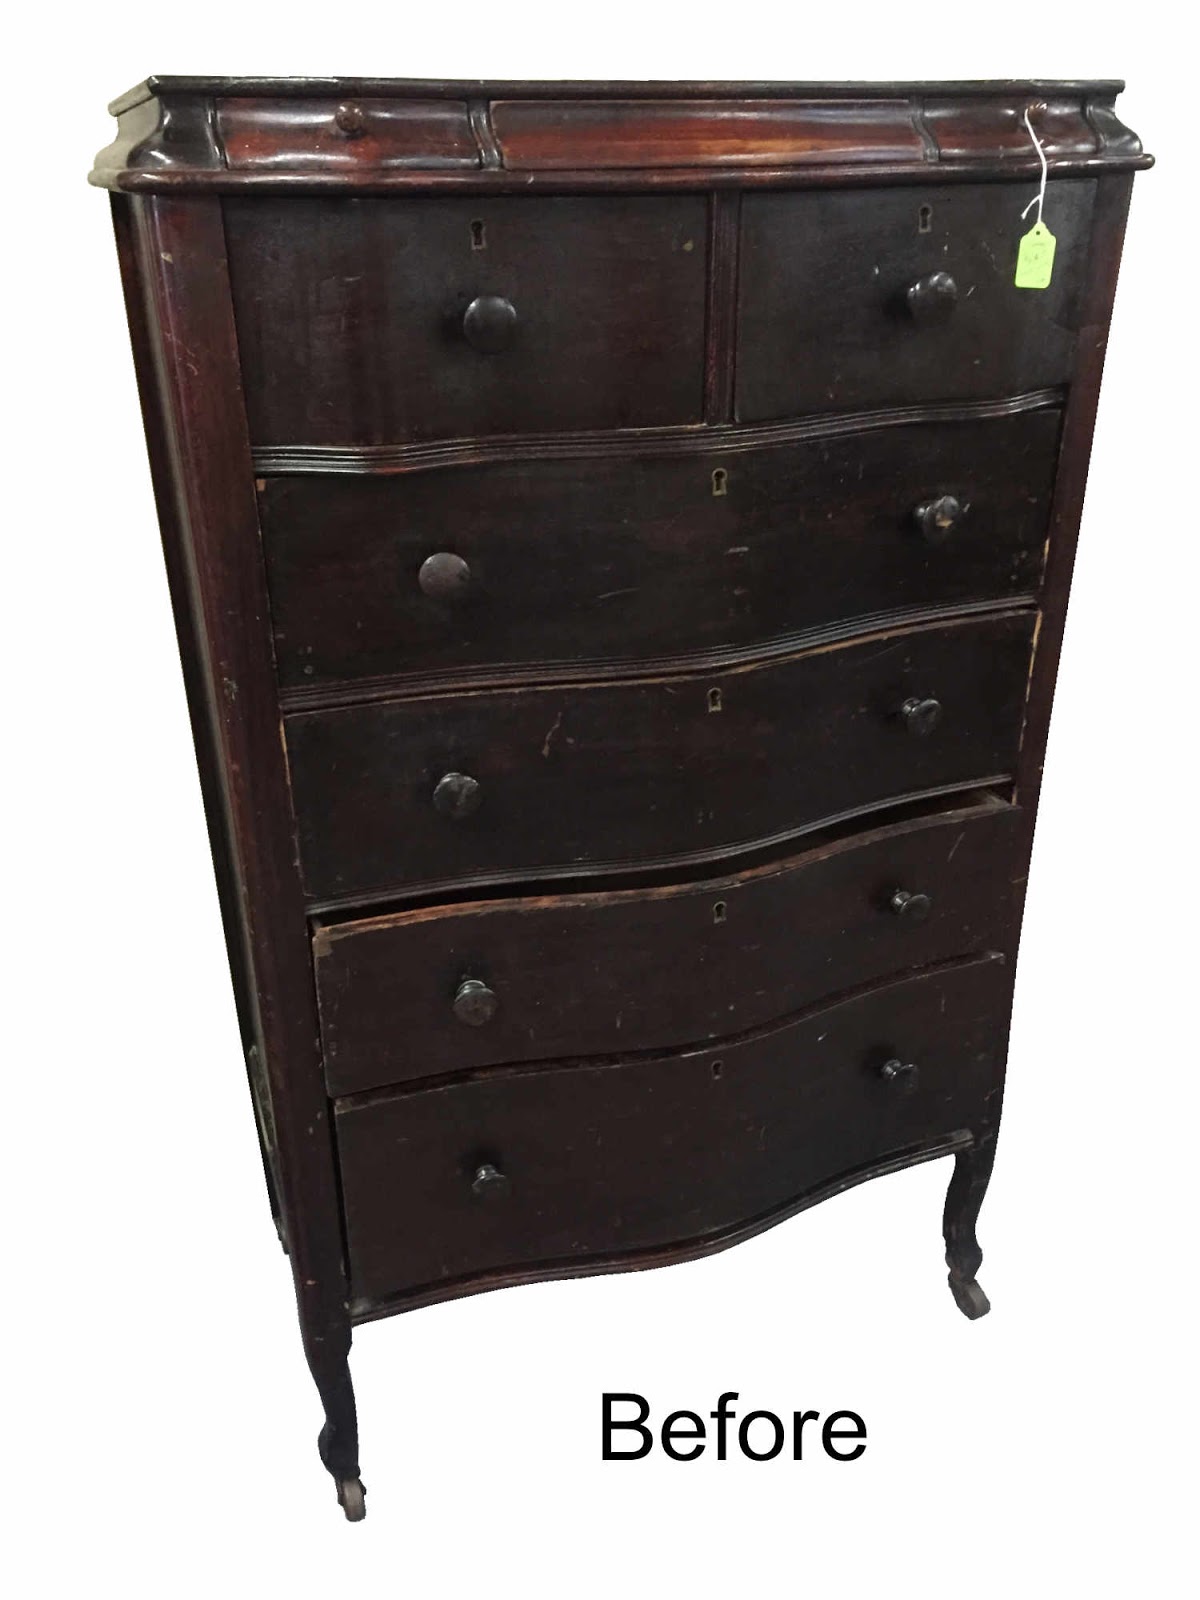 Finale Furniture Restoration Services Llc Antique Dresser With A